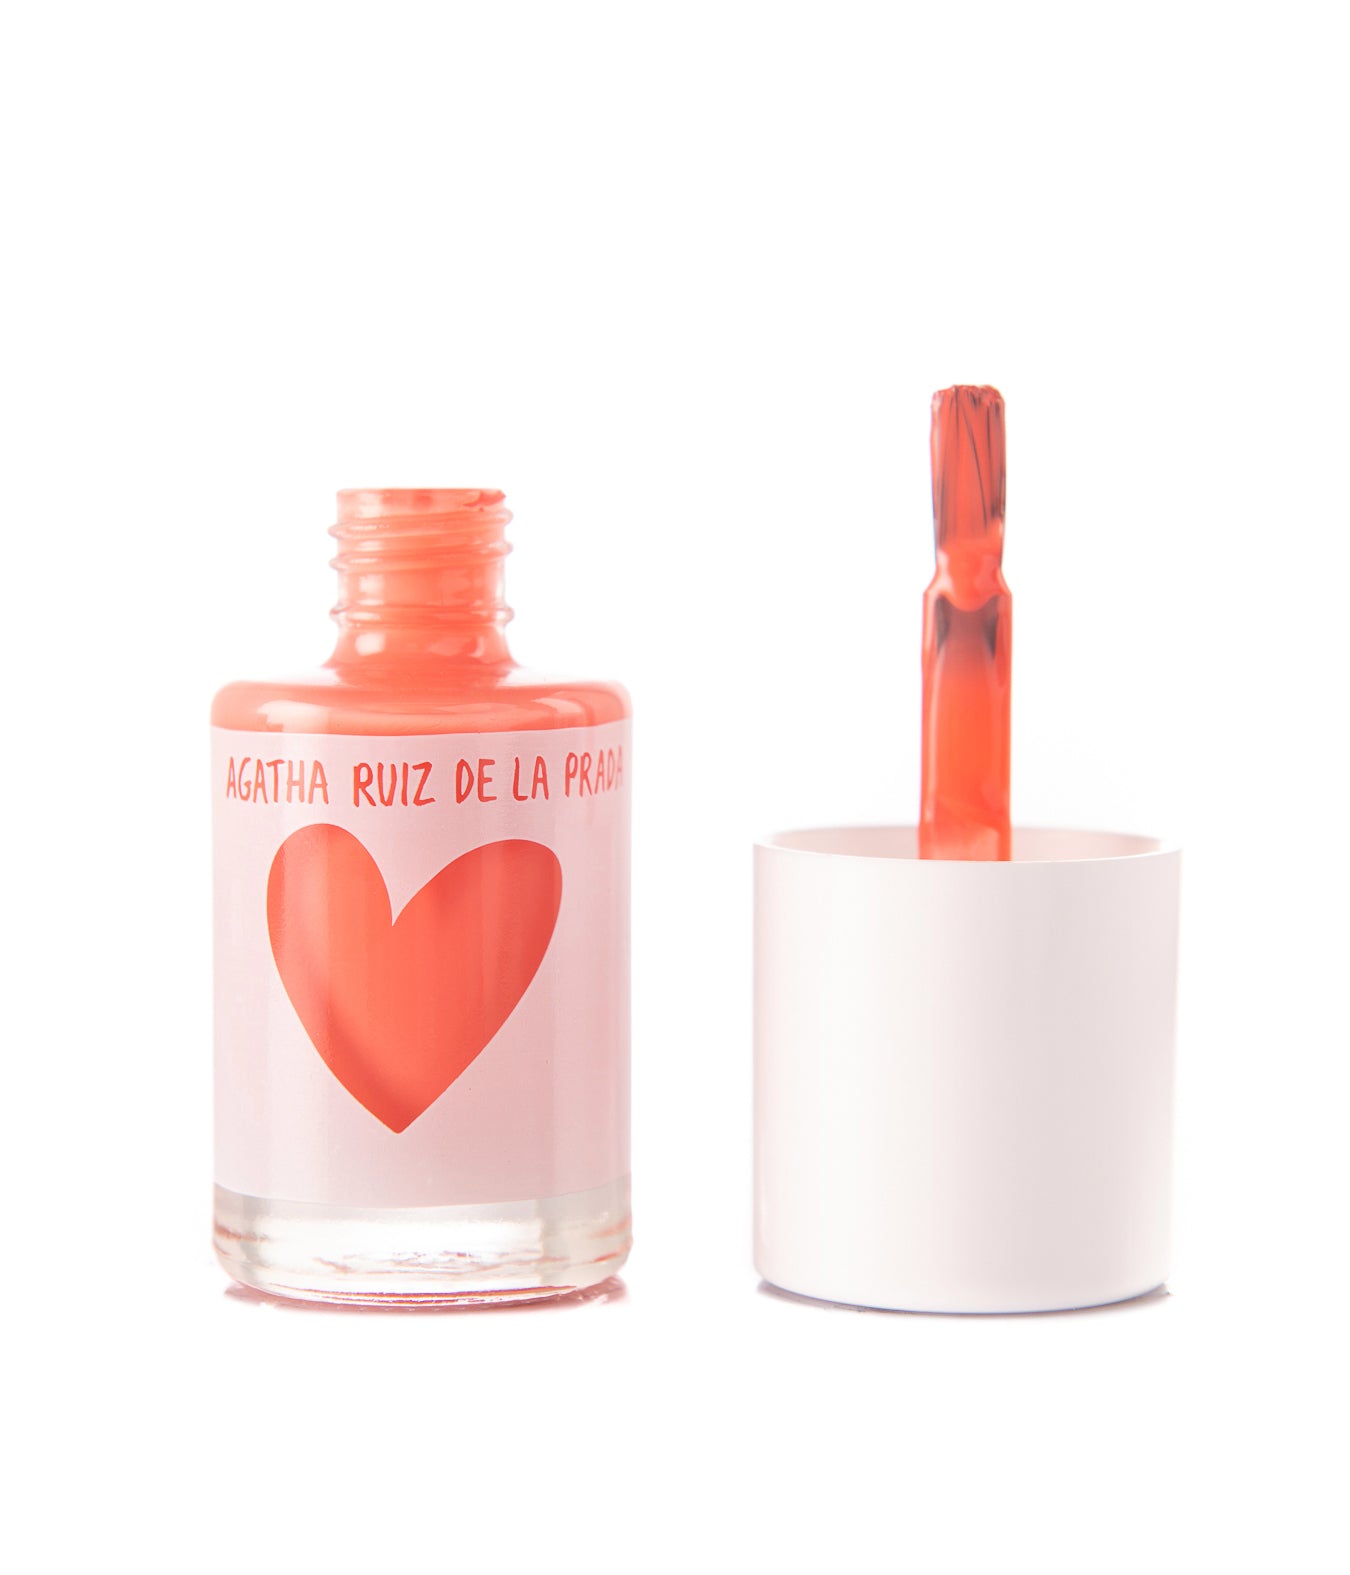 Agatha Ruiz de la Prada Nail Polish - Open Bottle with Cap and Brush Pastel Peach